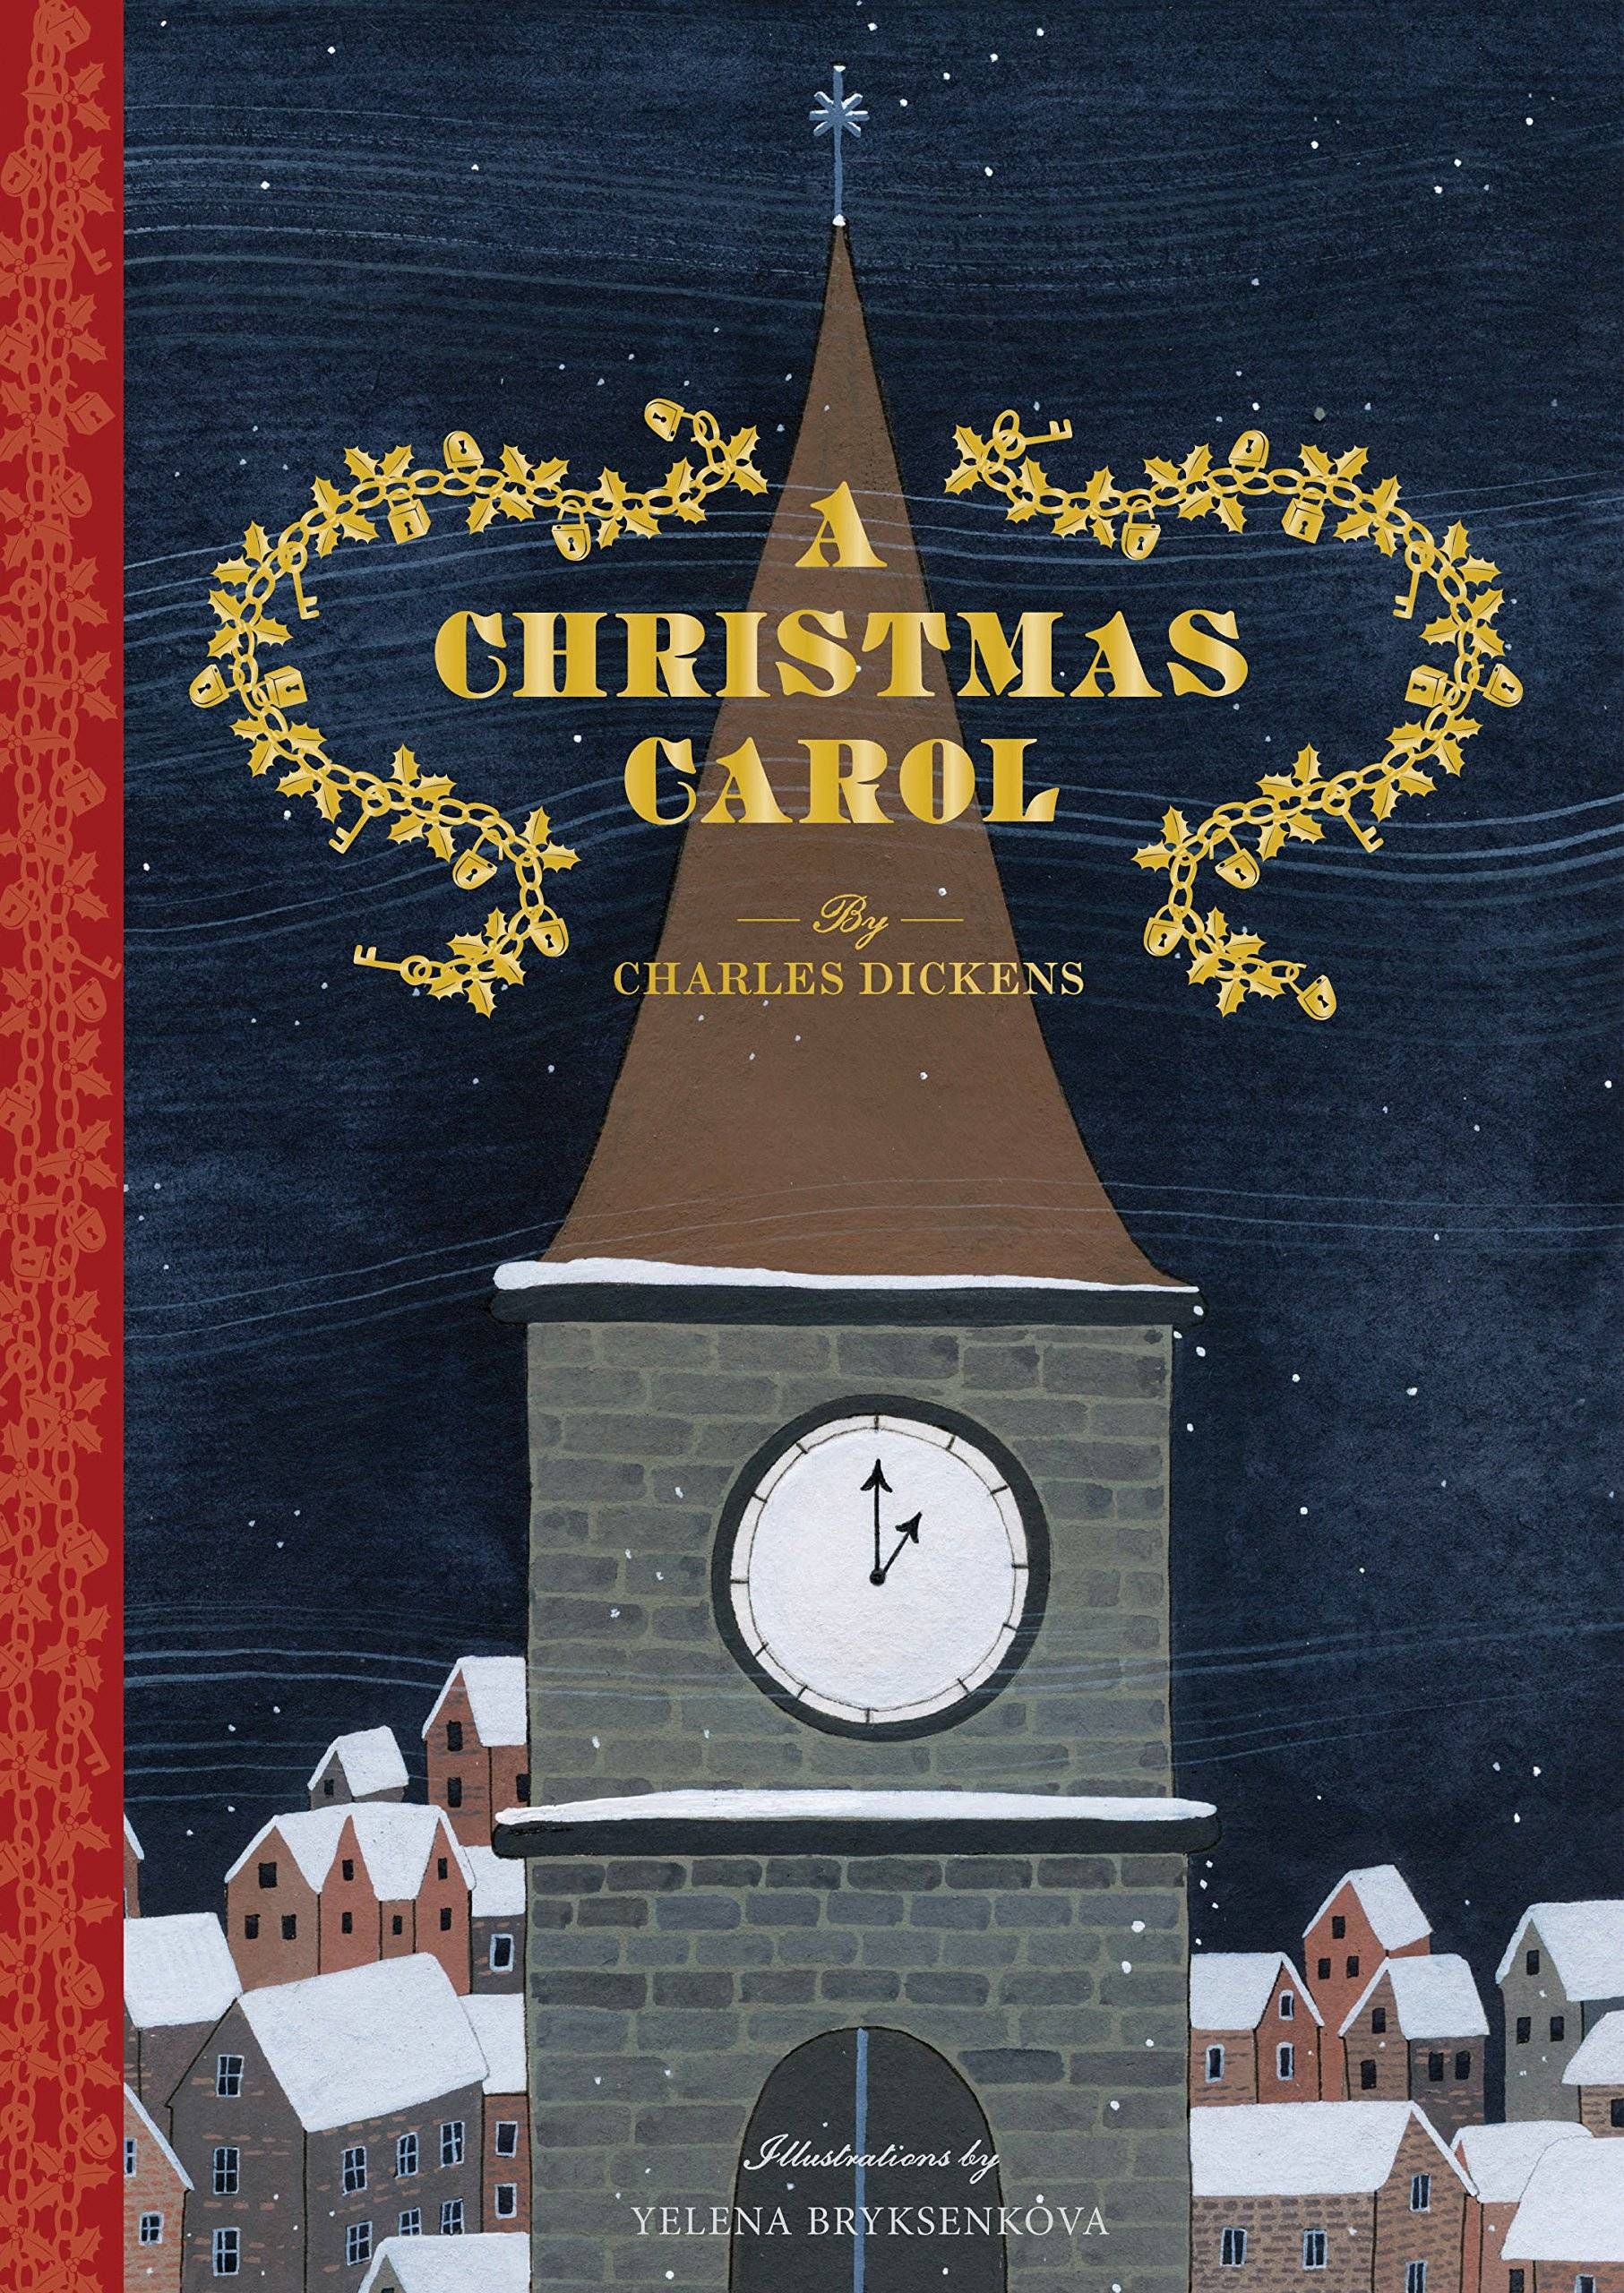 Christmas Books | A Christmas Carol by Charles Dickens